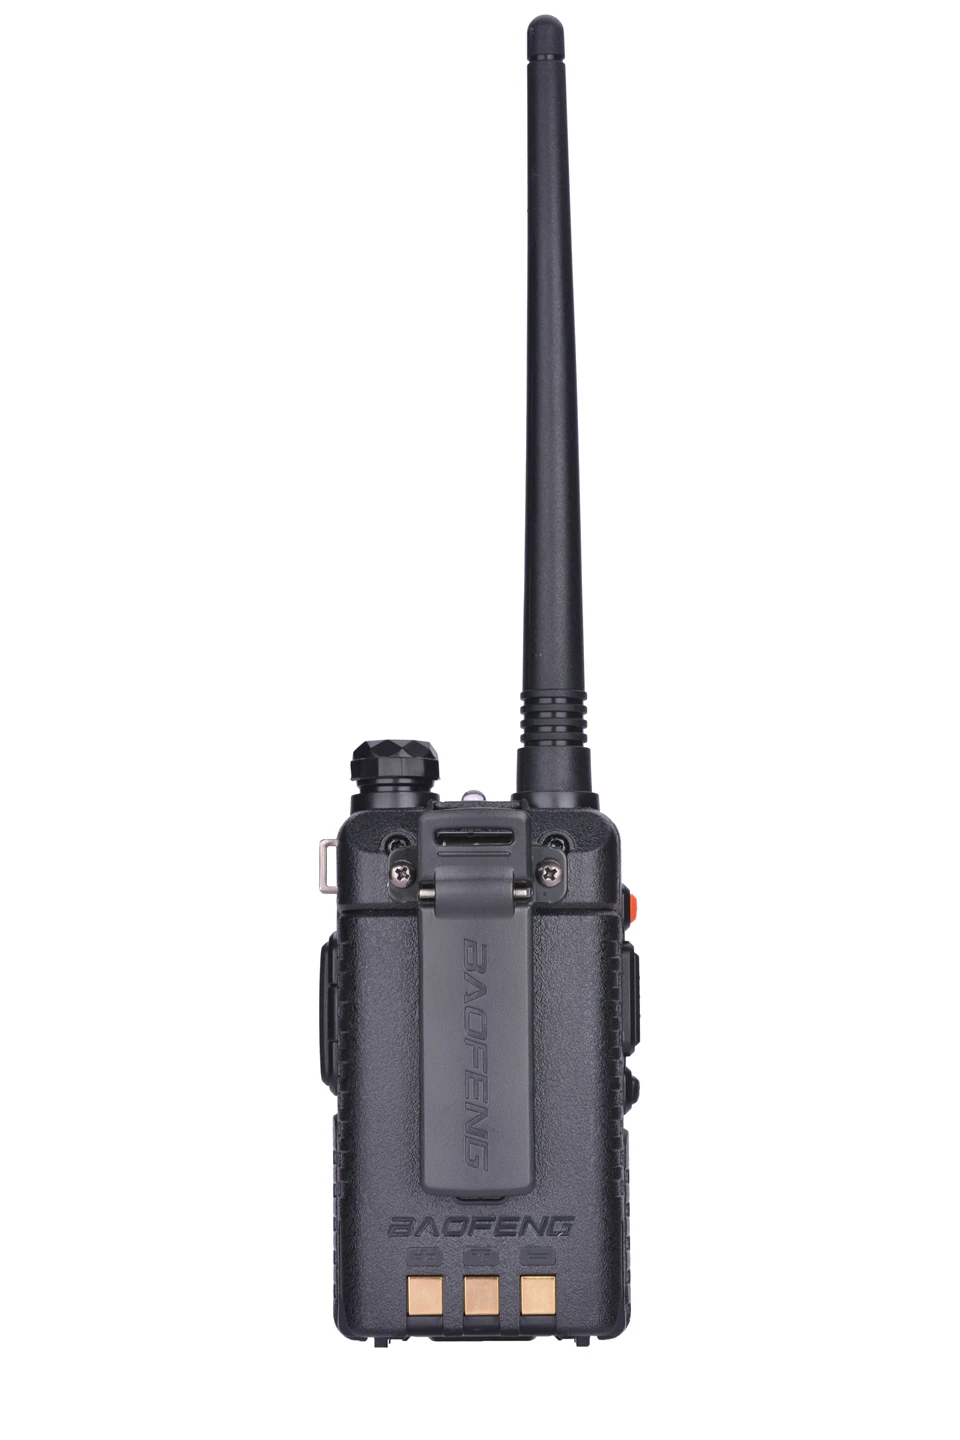 NEW Baofeng UV-5R Dual Band 5W Ham Two Way Radio Handheld HF Transceiver